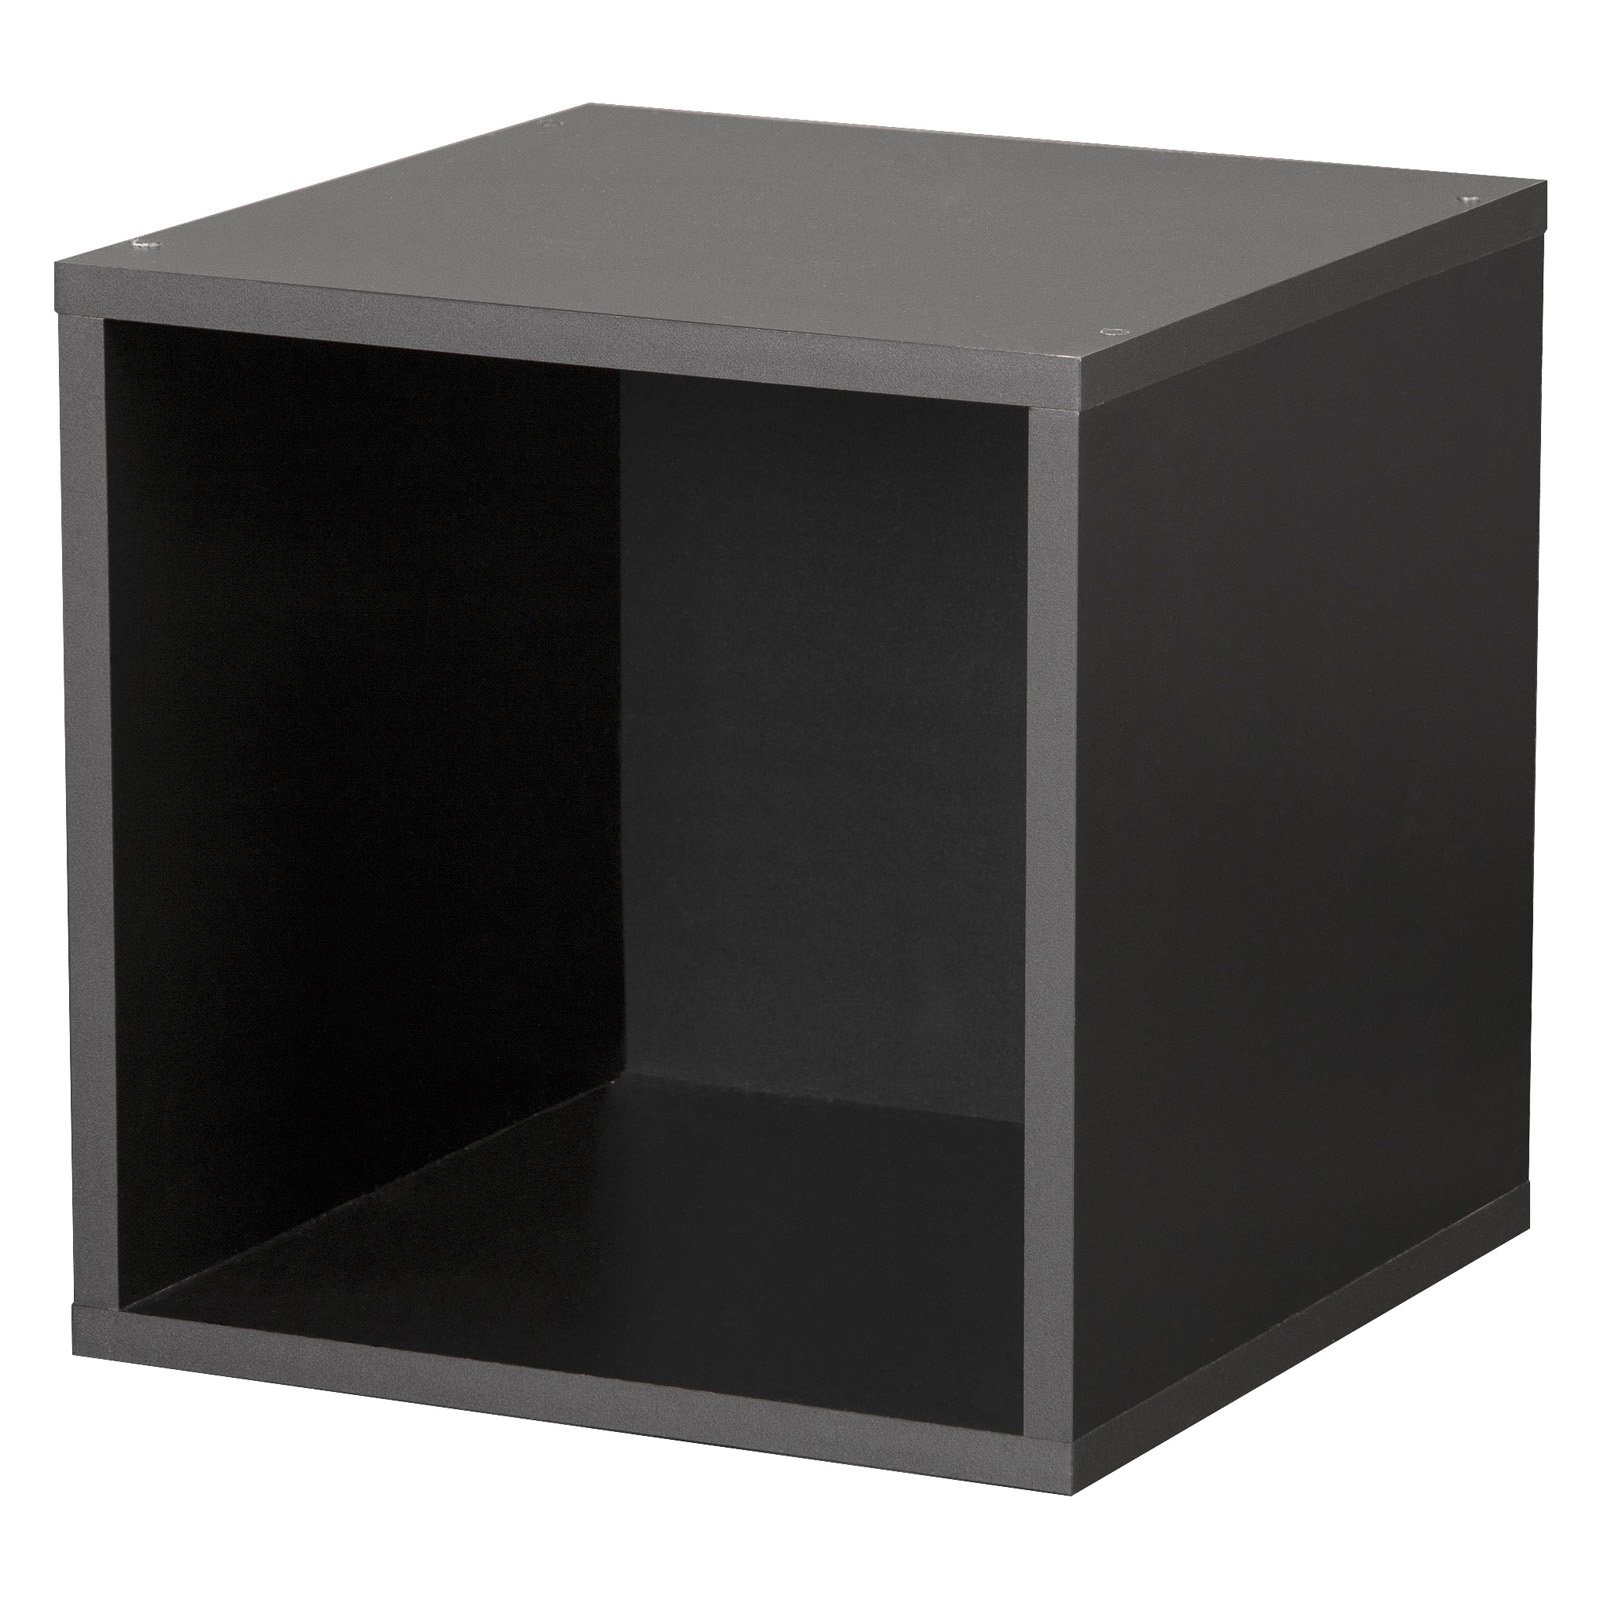 Modular Open Cube, Black - image 2 of 3